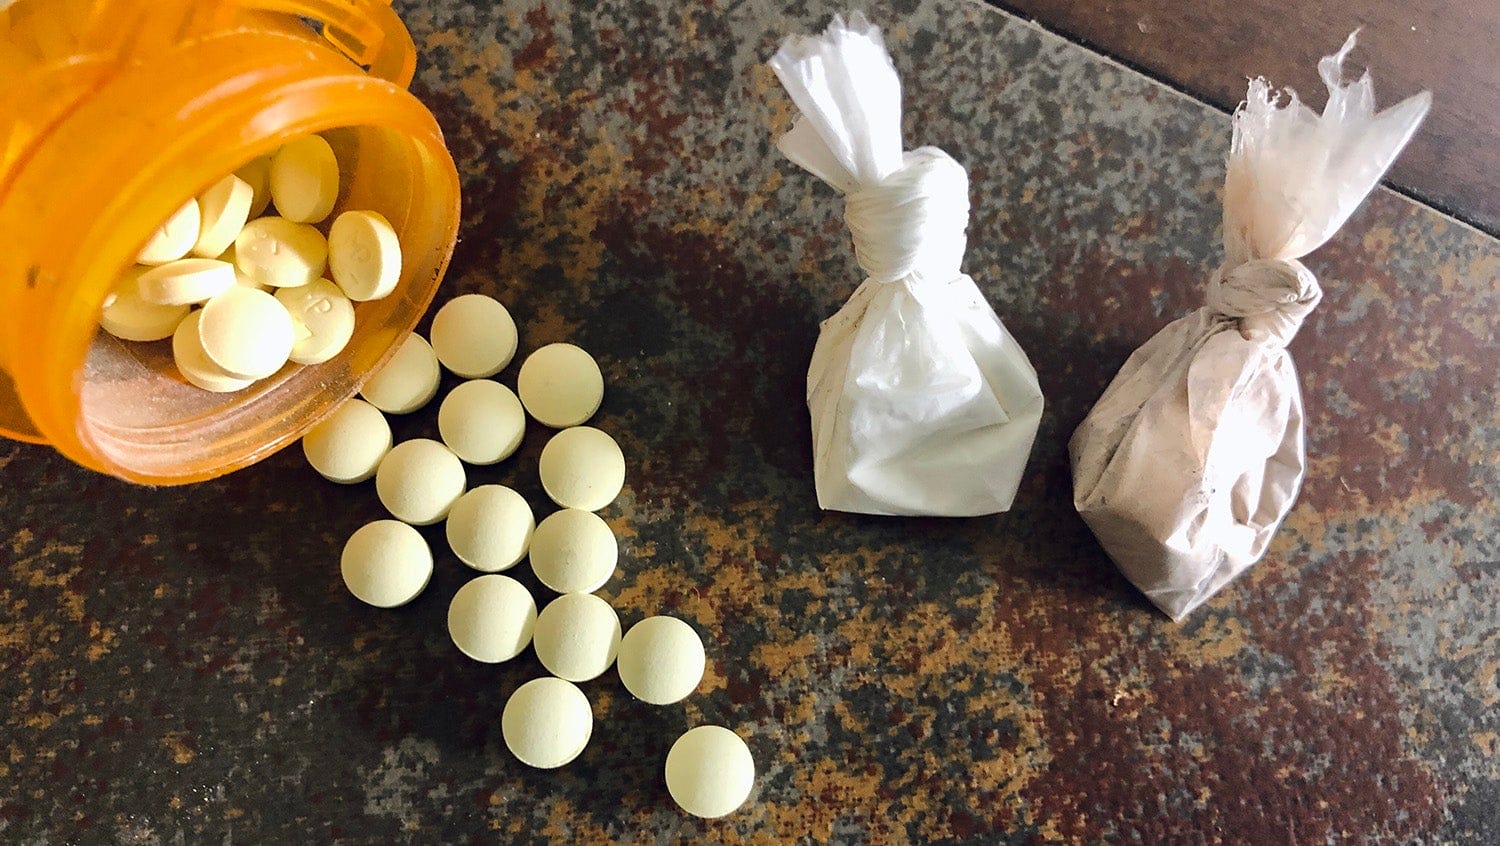 prescription pills and other substances